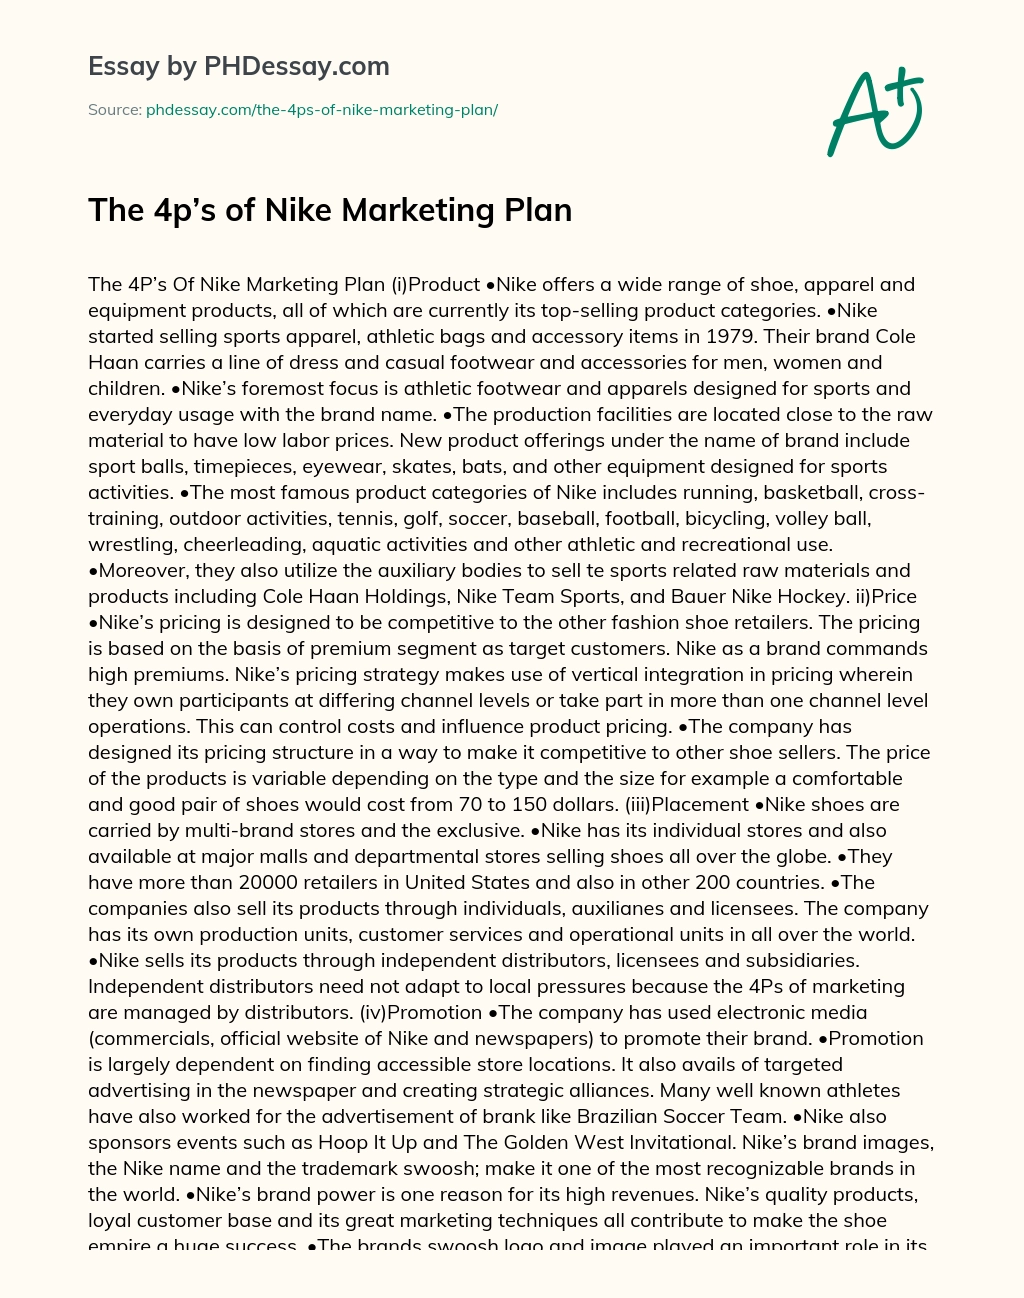 The 4p’s of Nike Marketing Plan essay